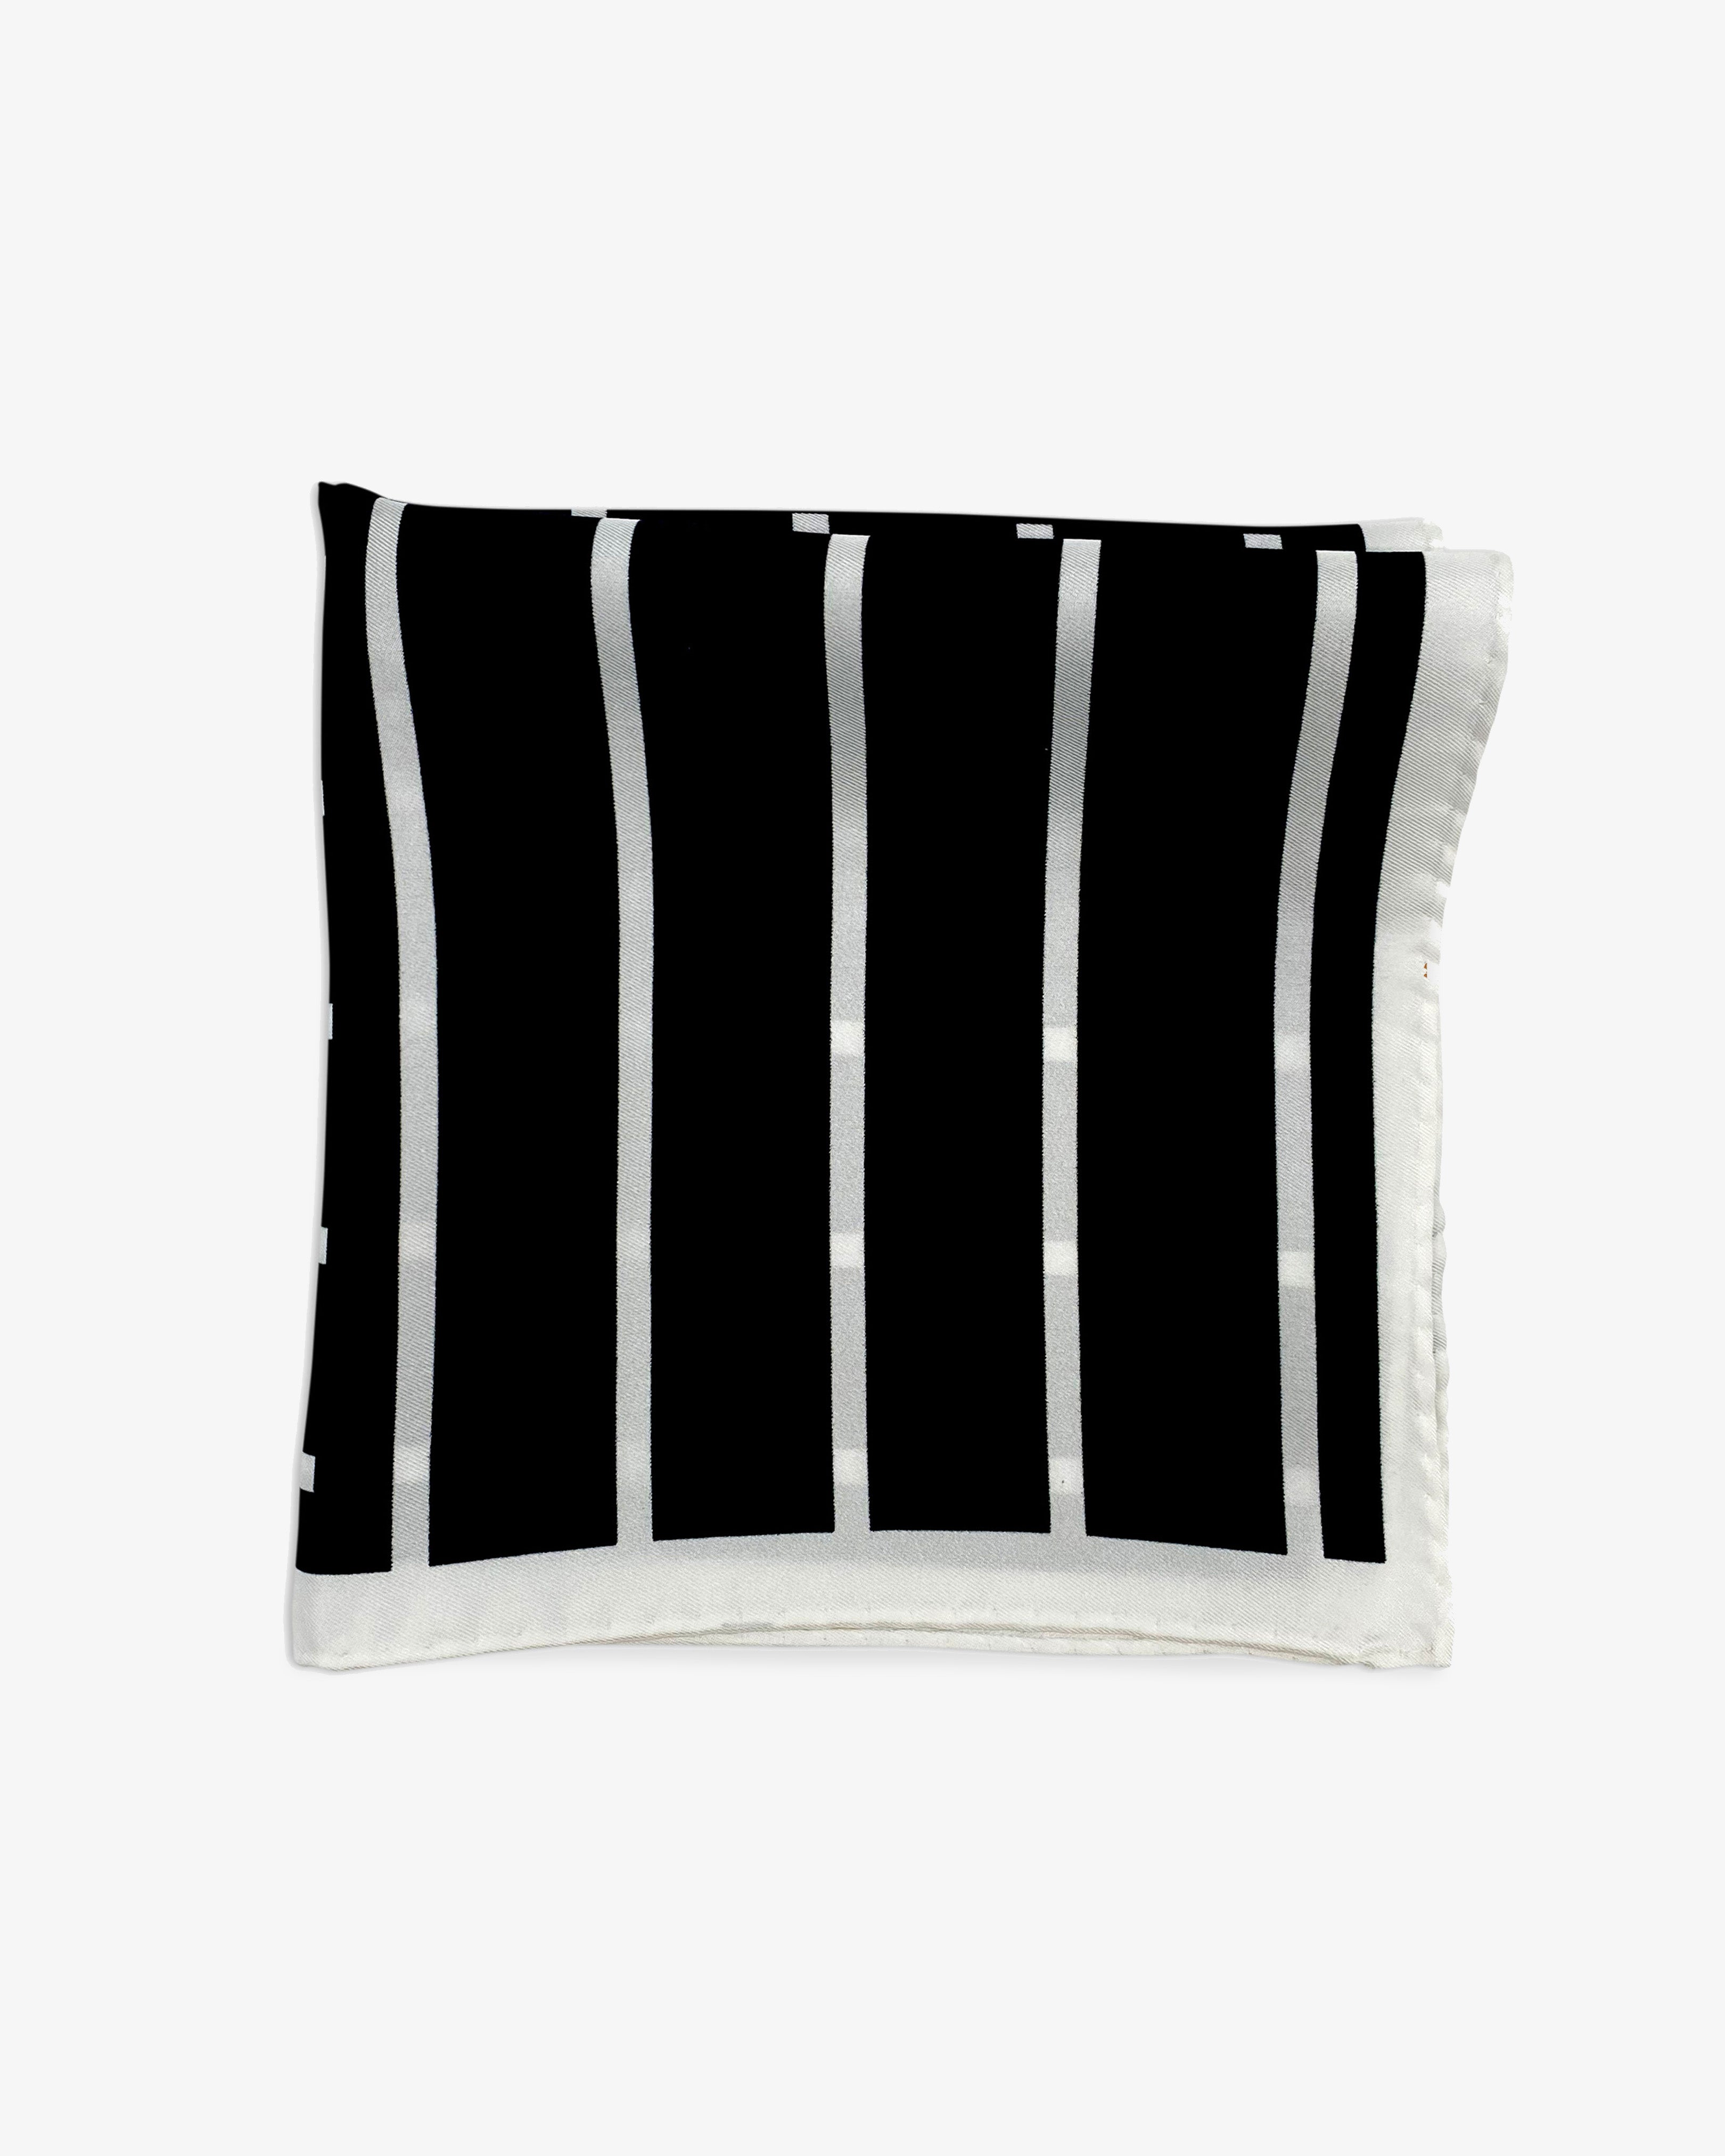 Mens Silk Pocket Square in Black & White Stripes - The Lloyd